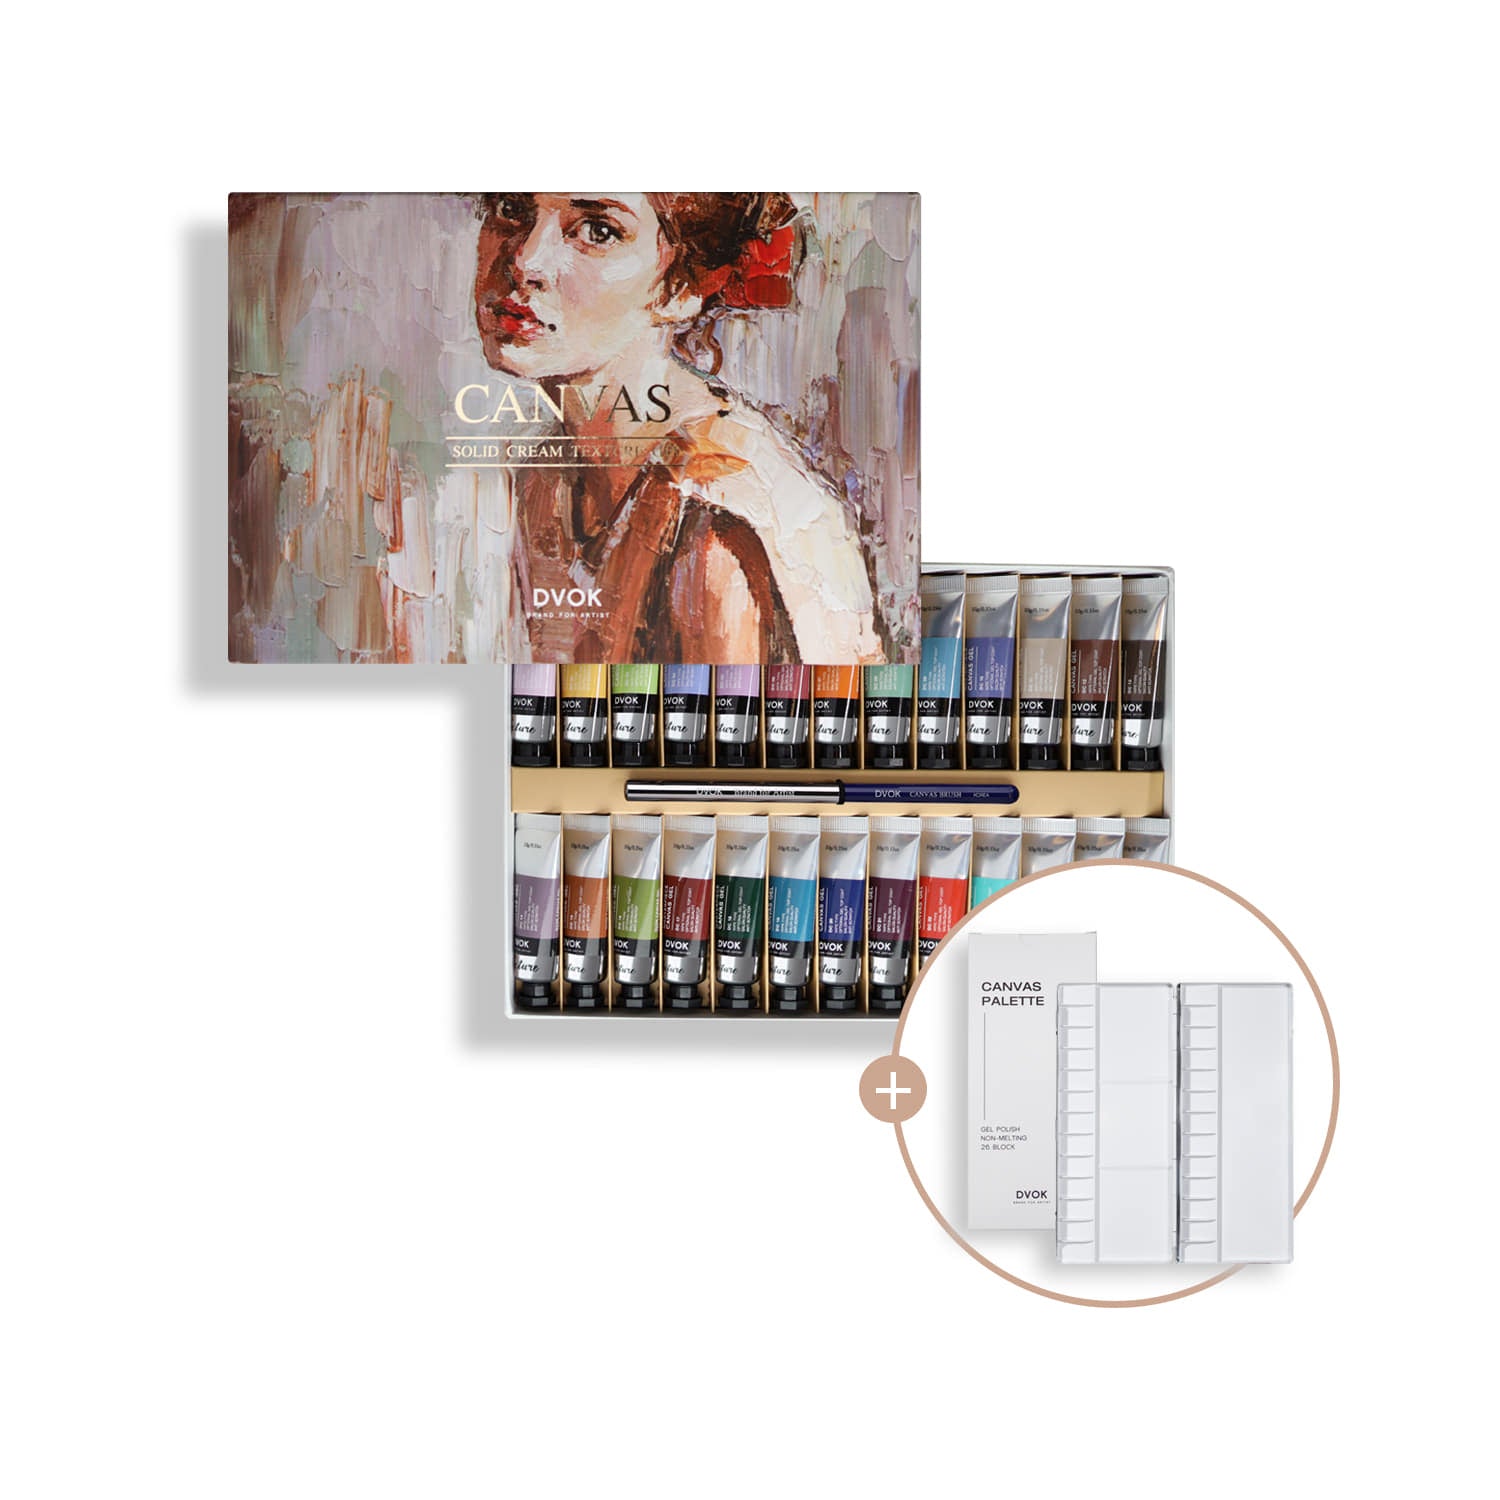 DVOK Canvas 26pc Collection (Solid Cream Texture Gel)